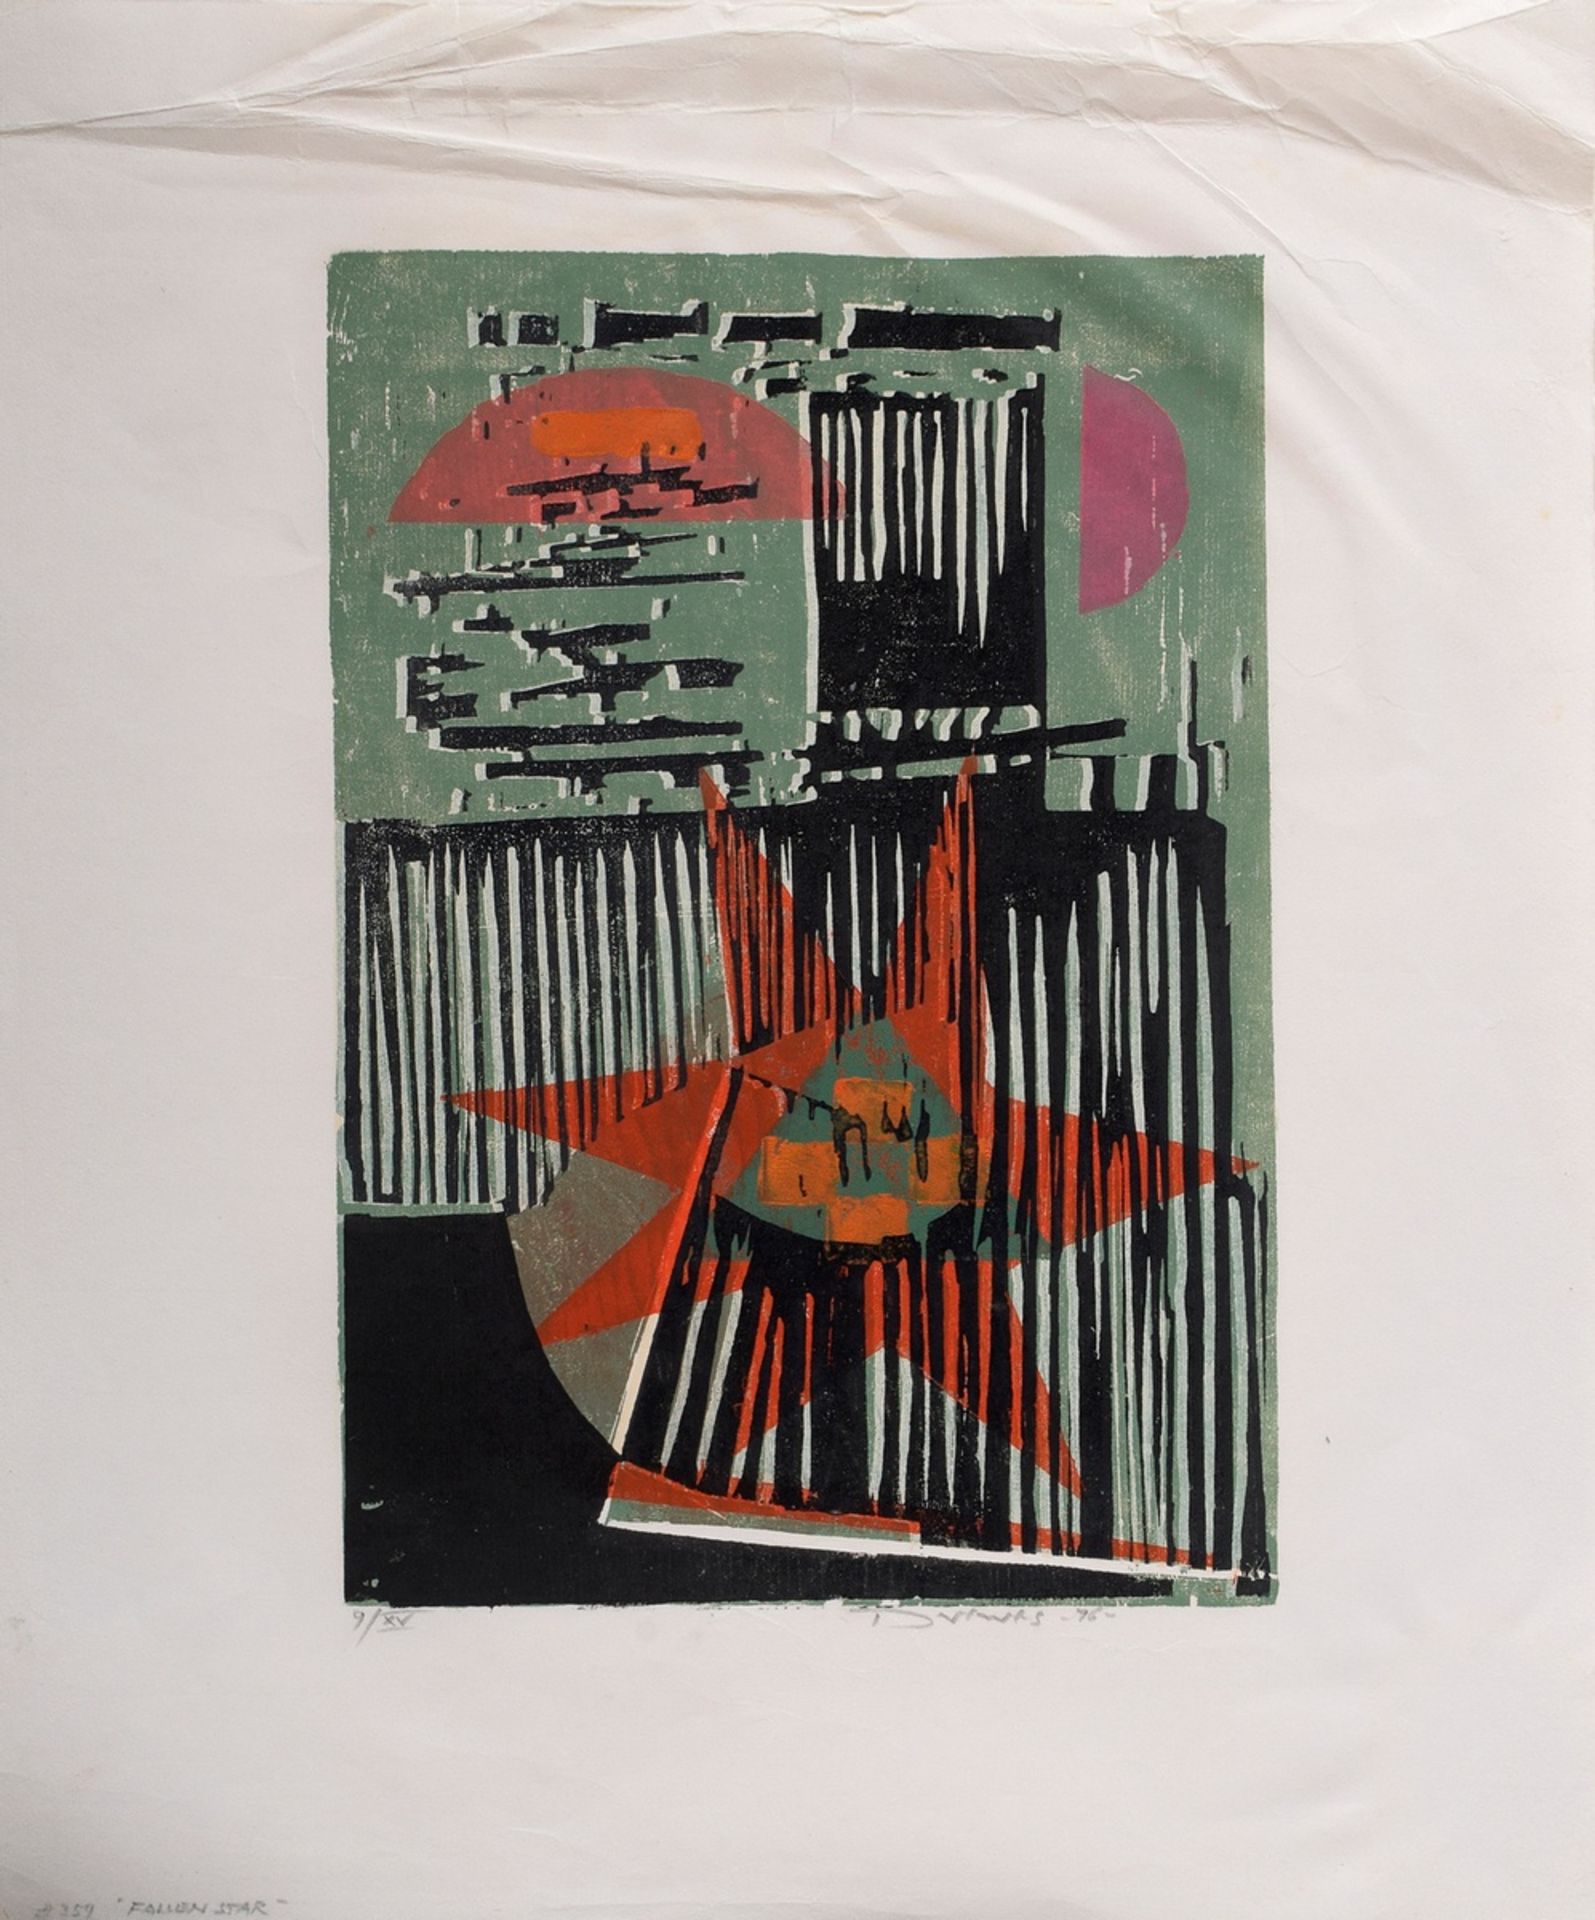 Drewes, Werner (1899-1985) "Fallen Star" 1976, color woodcut, 9/25, b. sign./dat./num./titl., cat.  - Image 2 of 3